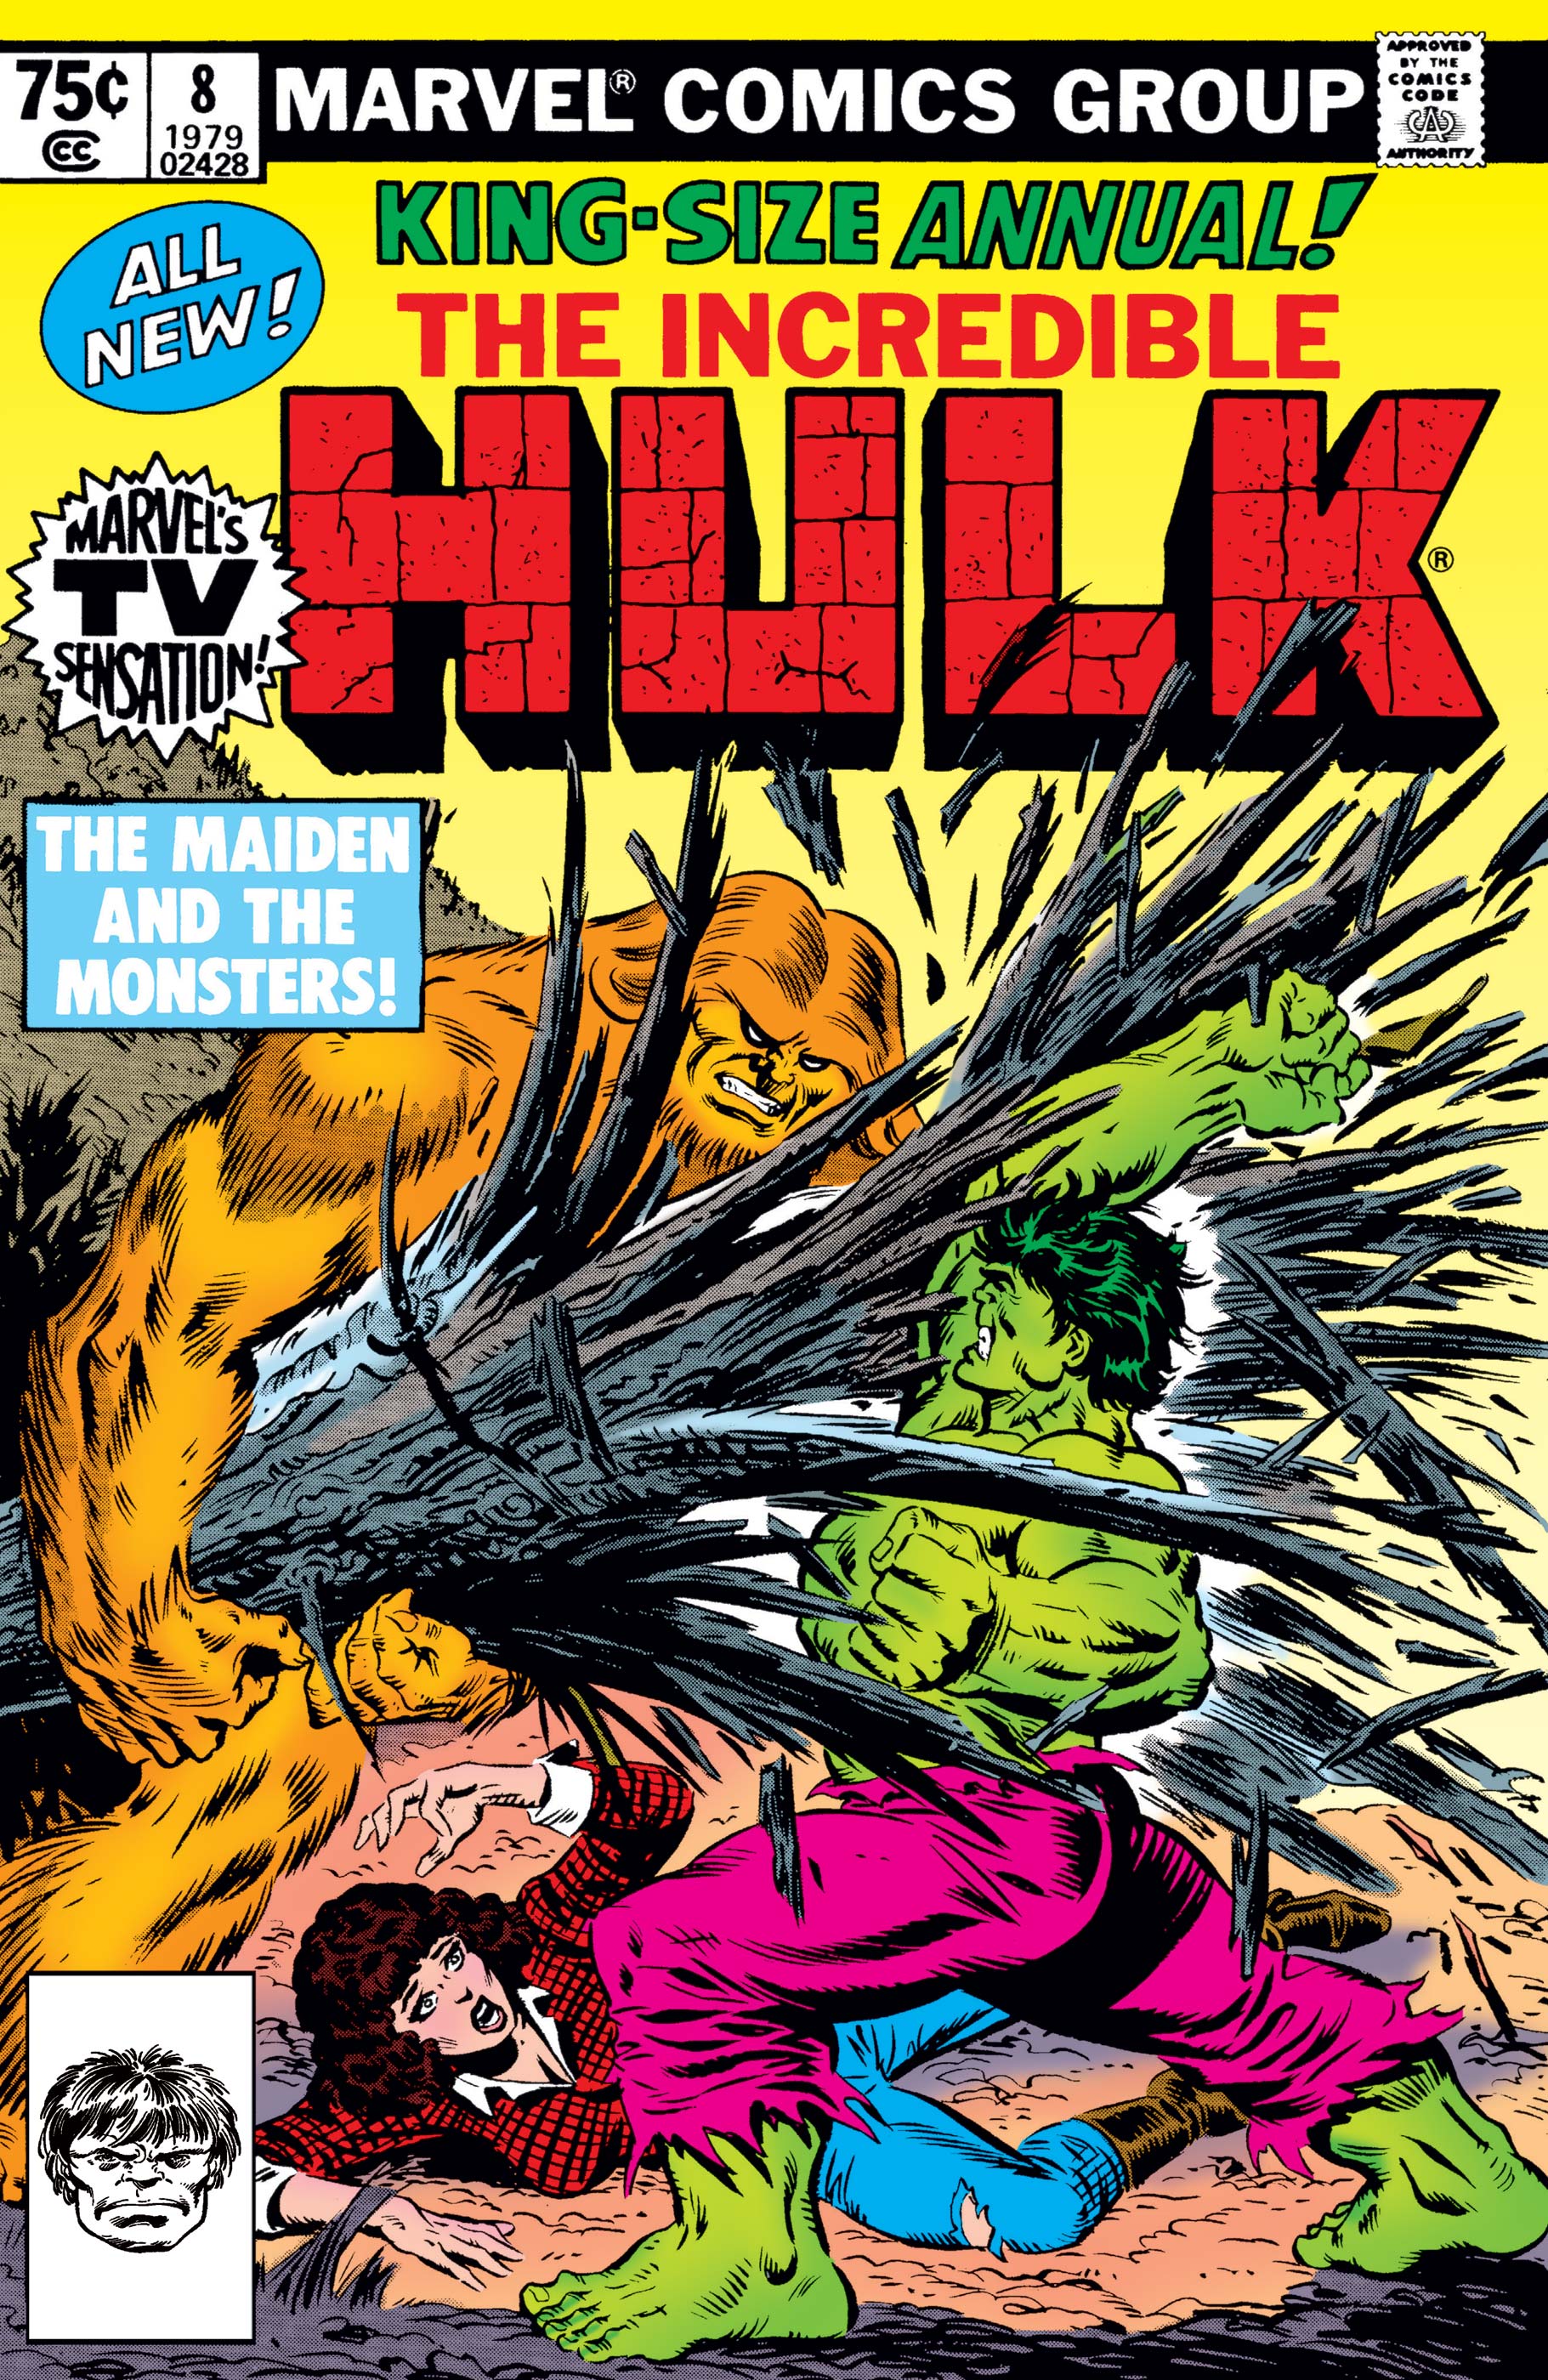 Incredible Hulk Annual (1976) #8